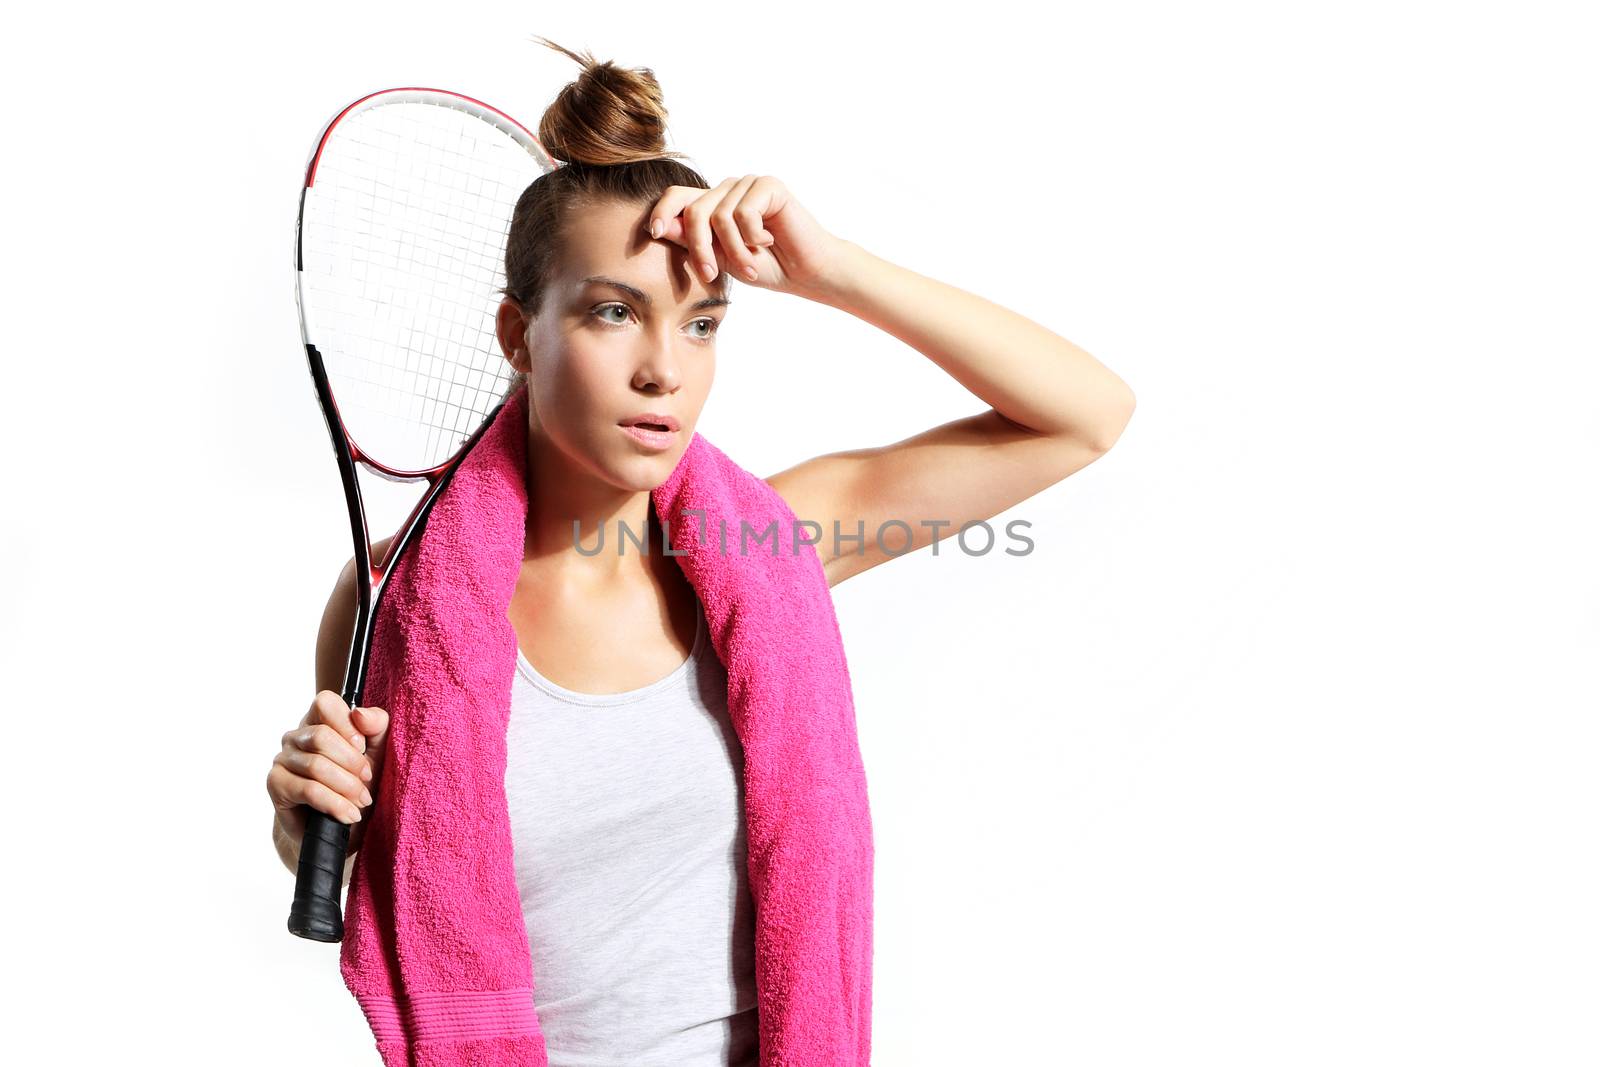 playing squash by robert_przybysz